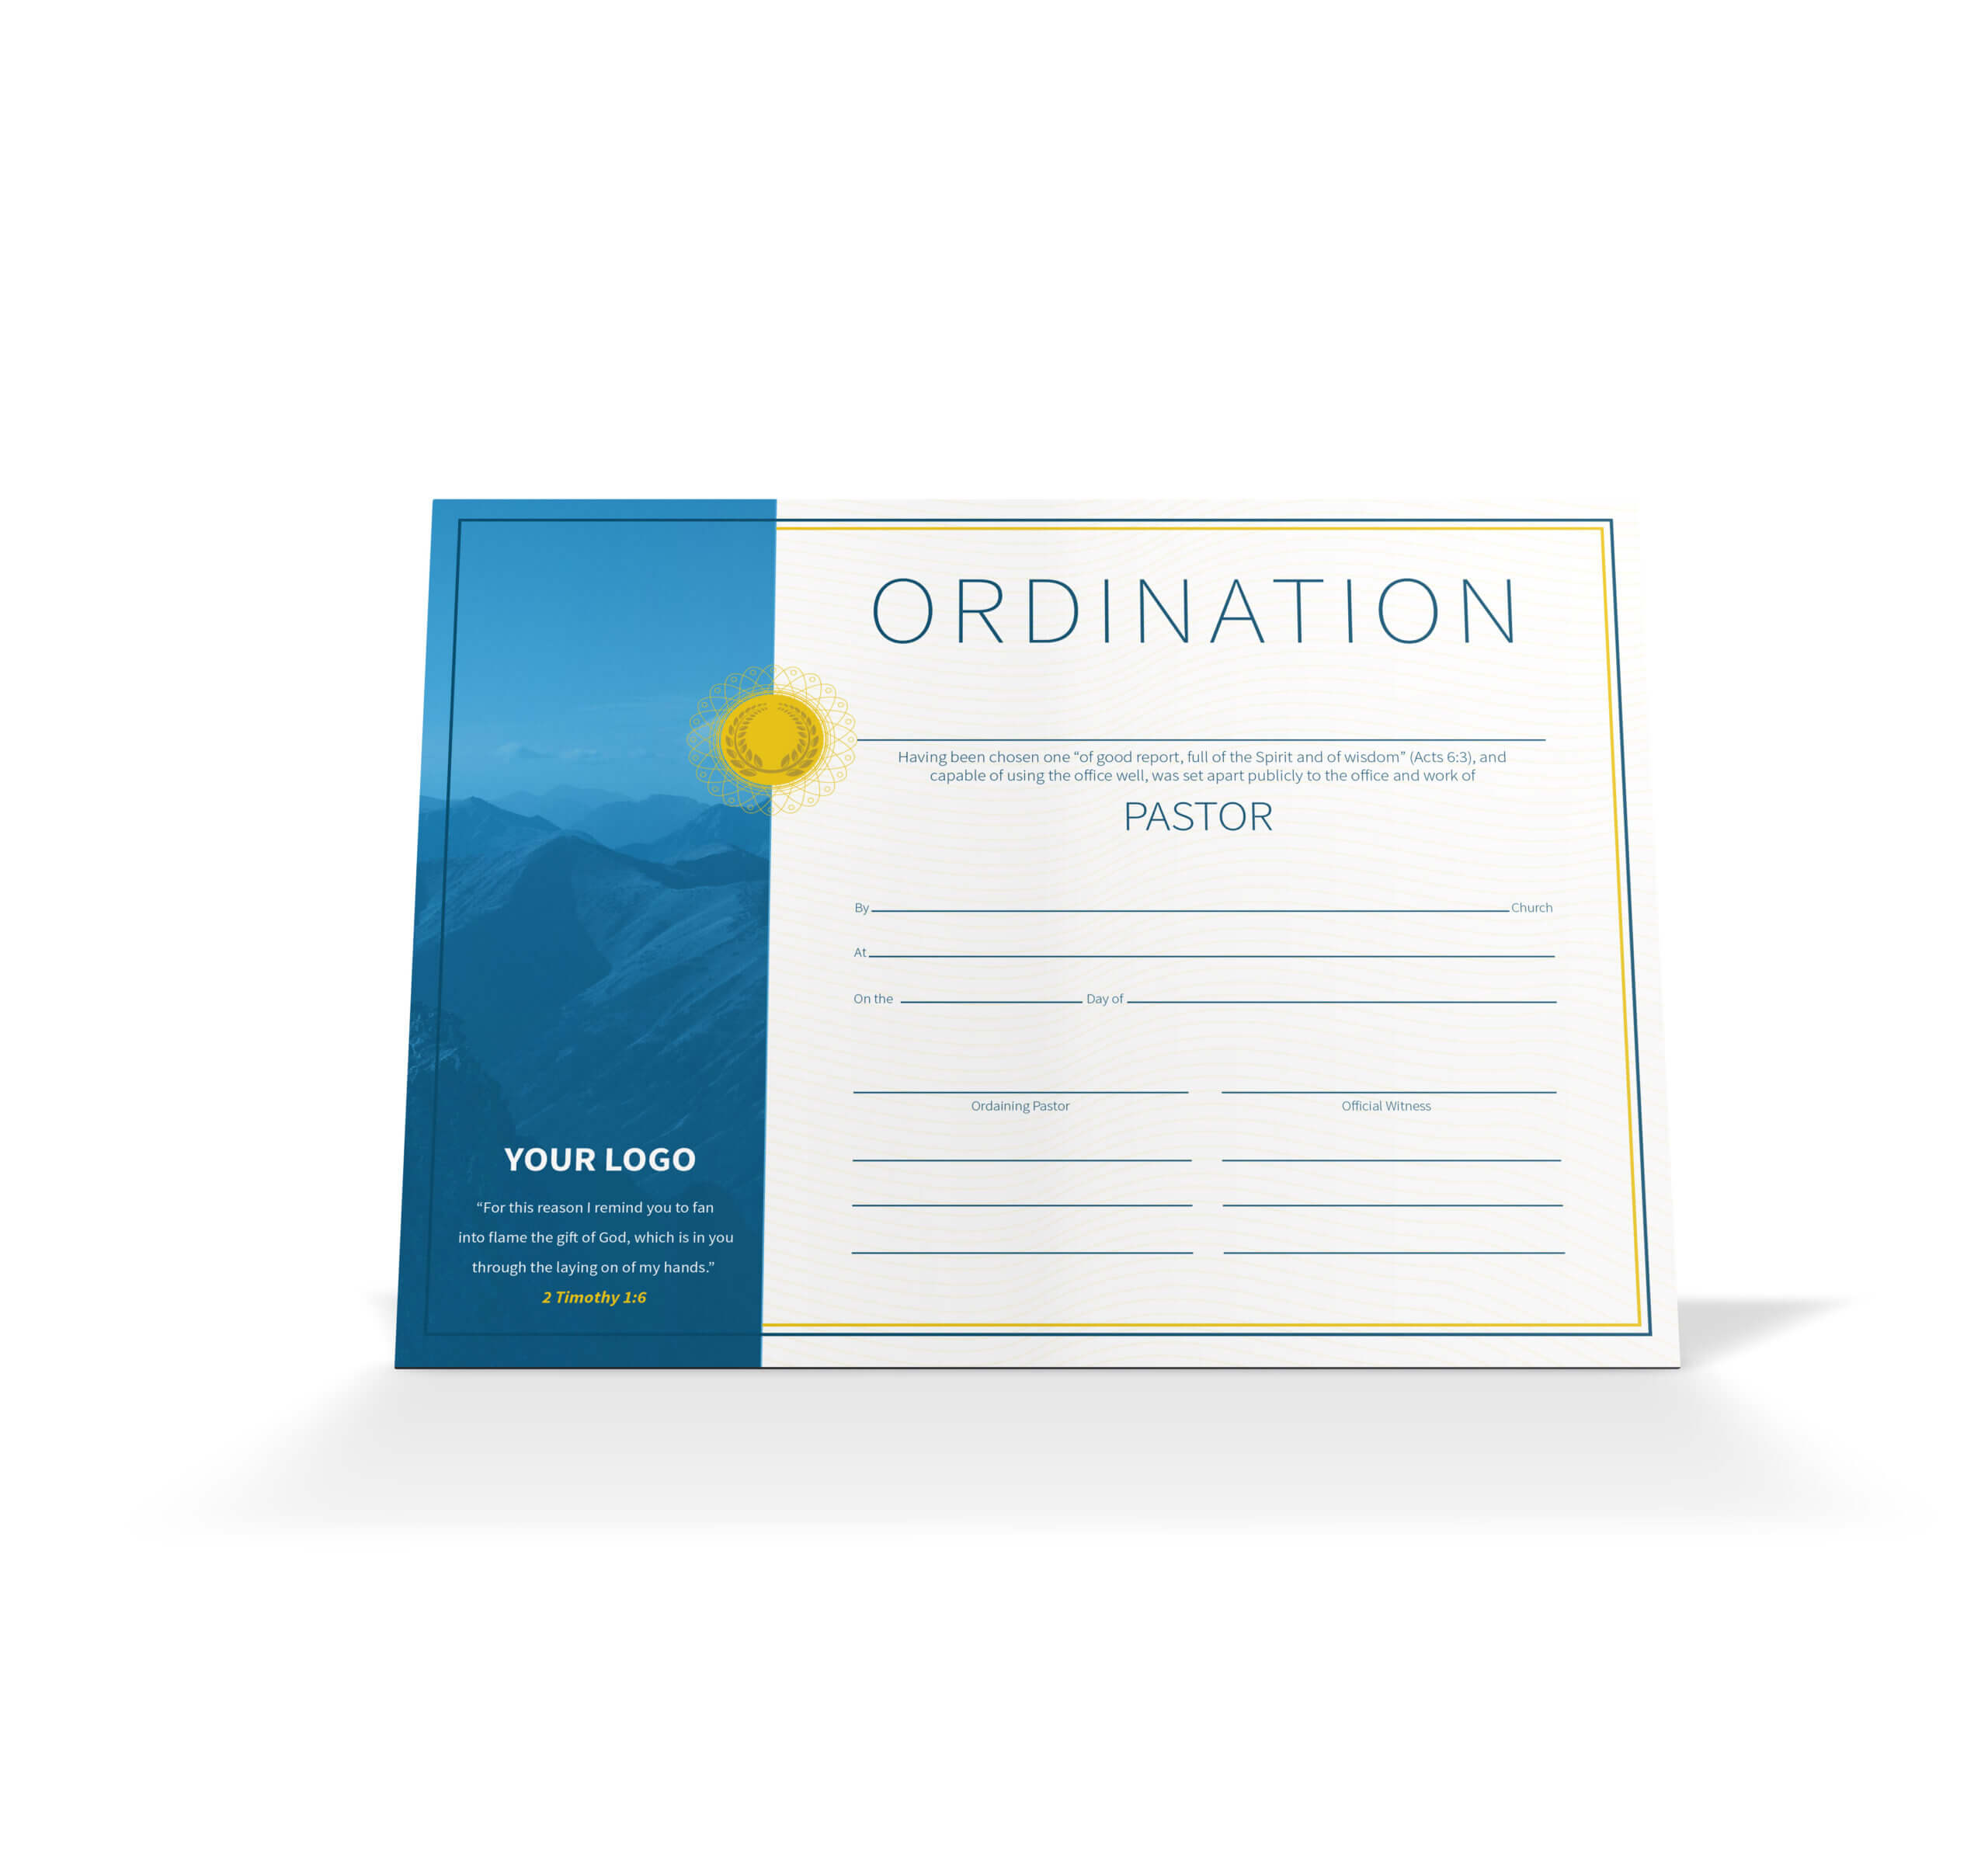 Pastor Ordination Certificate – Vineyard Digital Membership Pertaining To Free Ordination Certificate Template